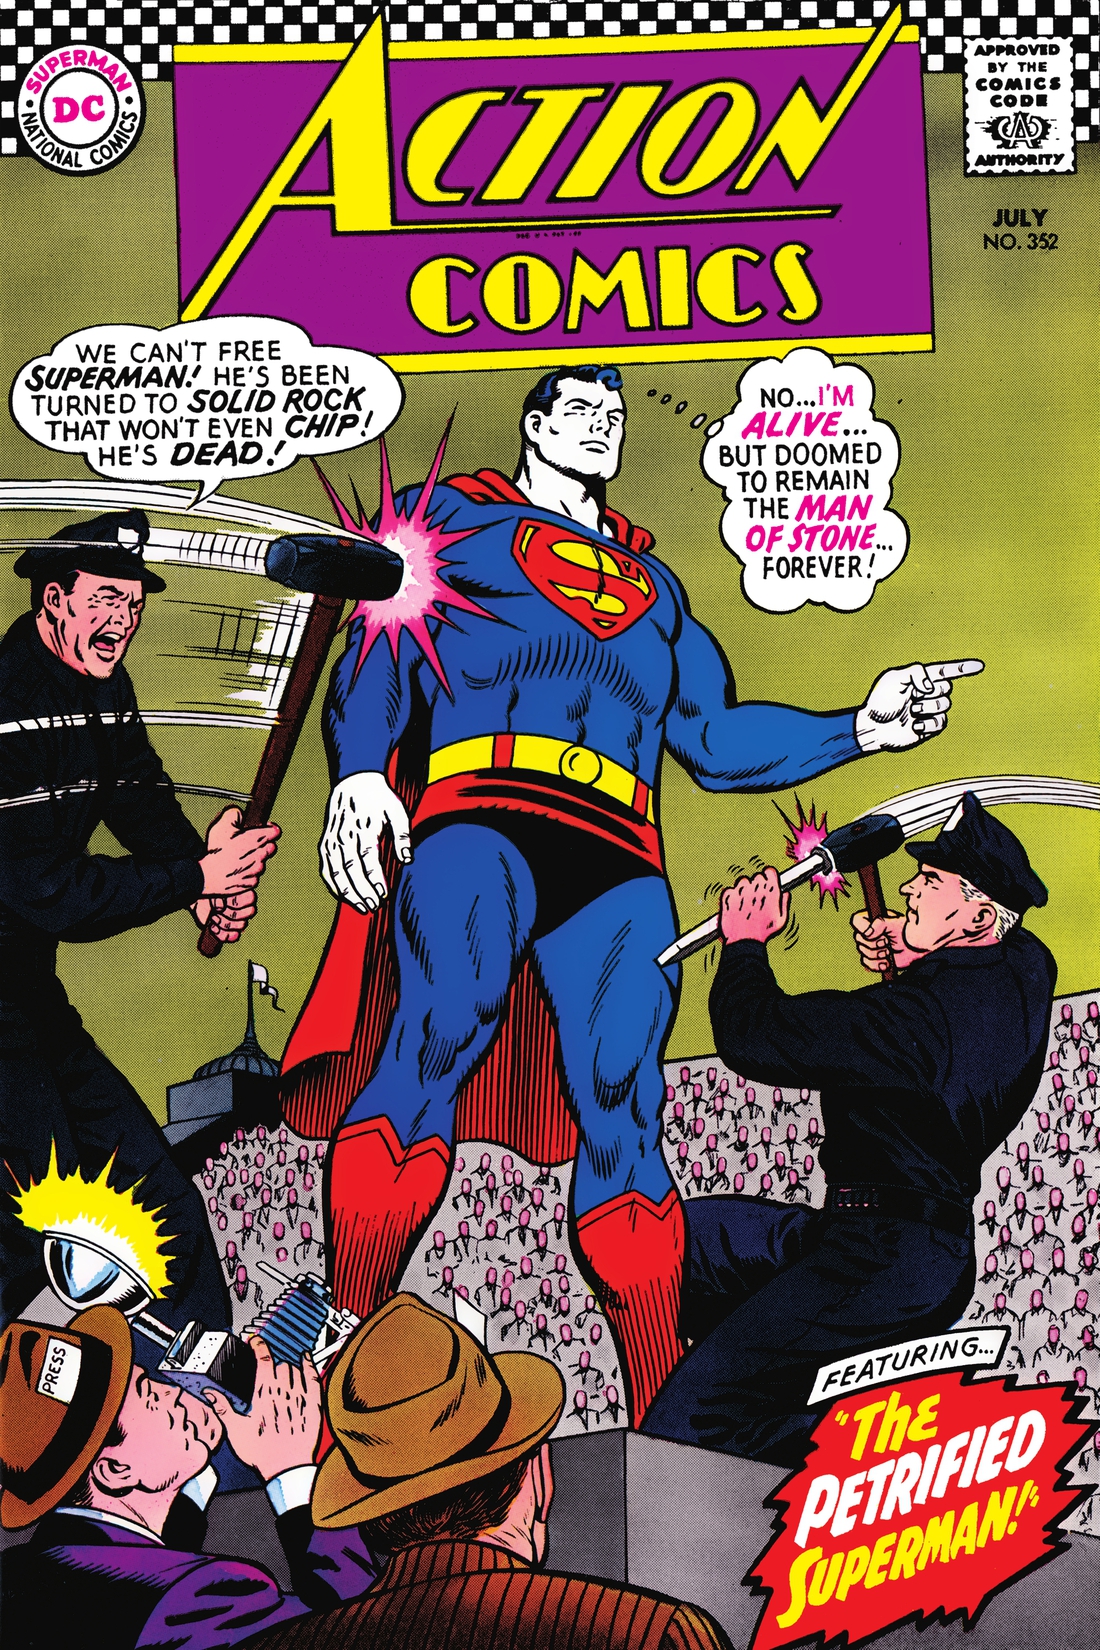 Action Comics (1938-2011) #352 preview images